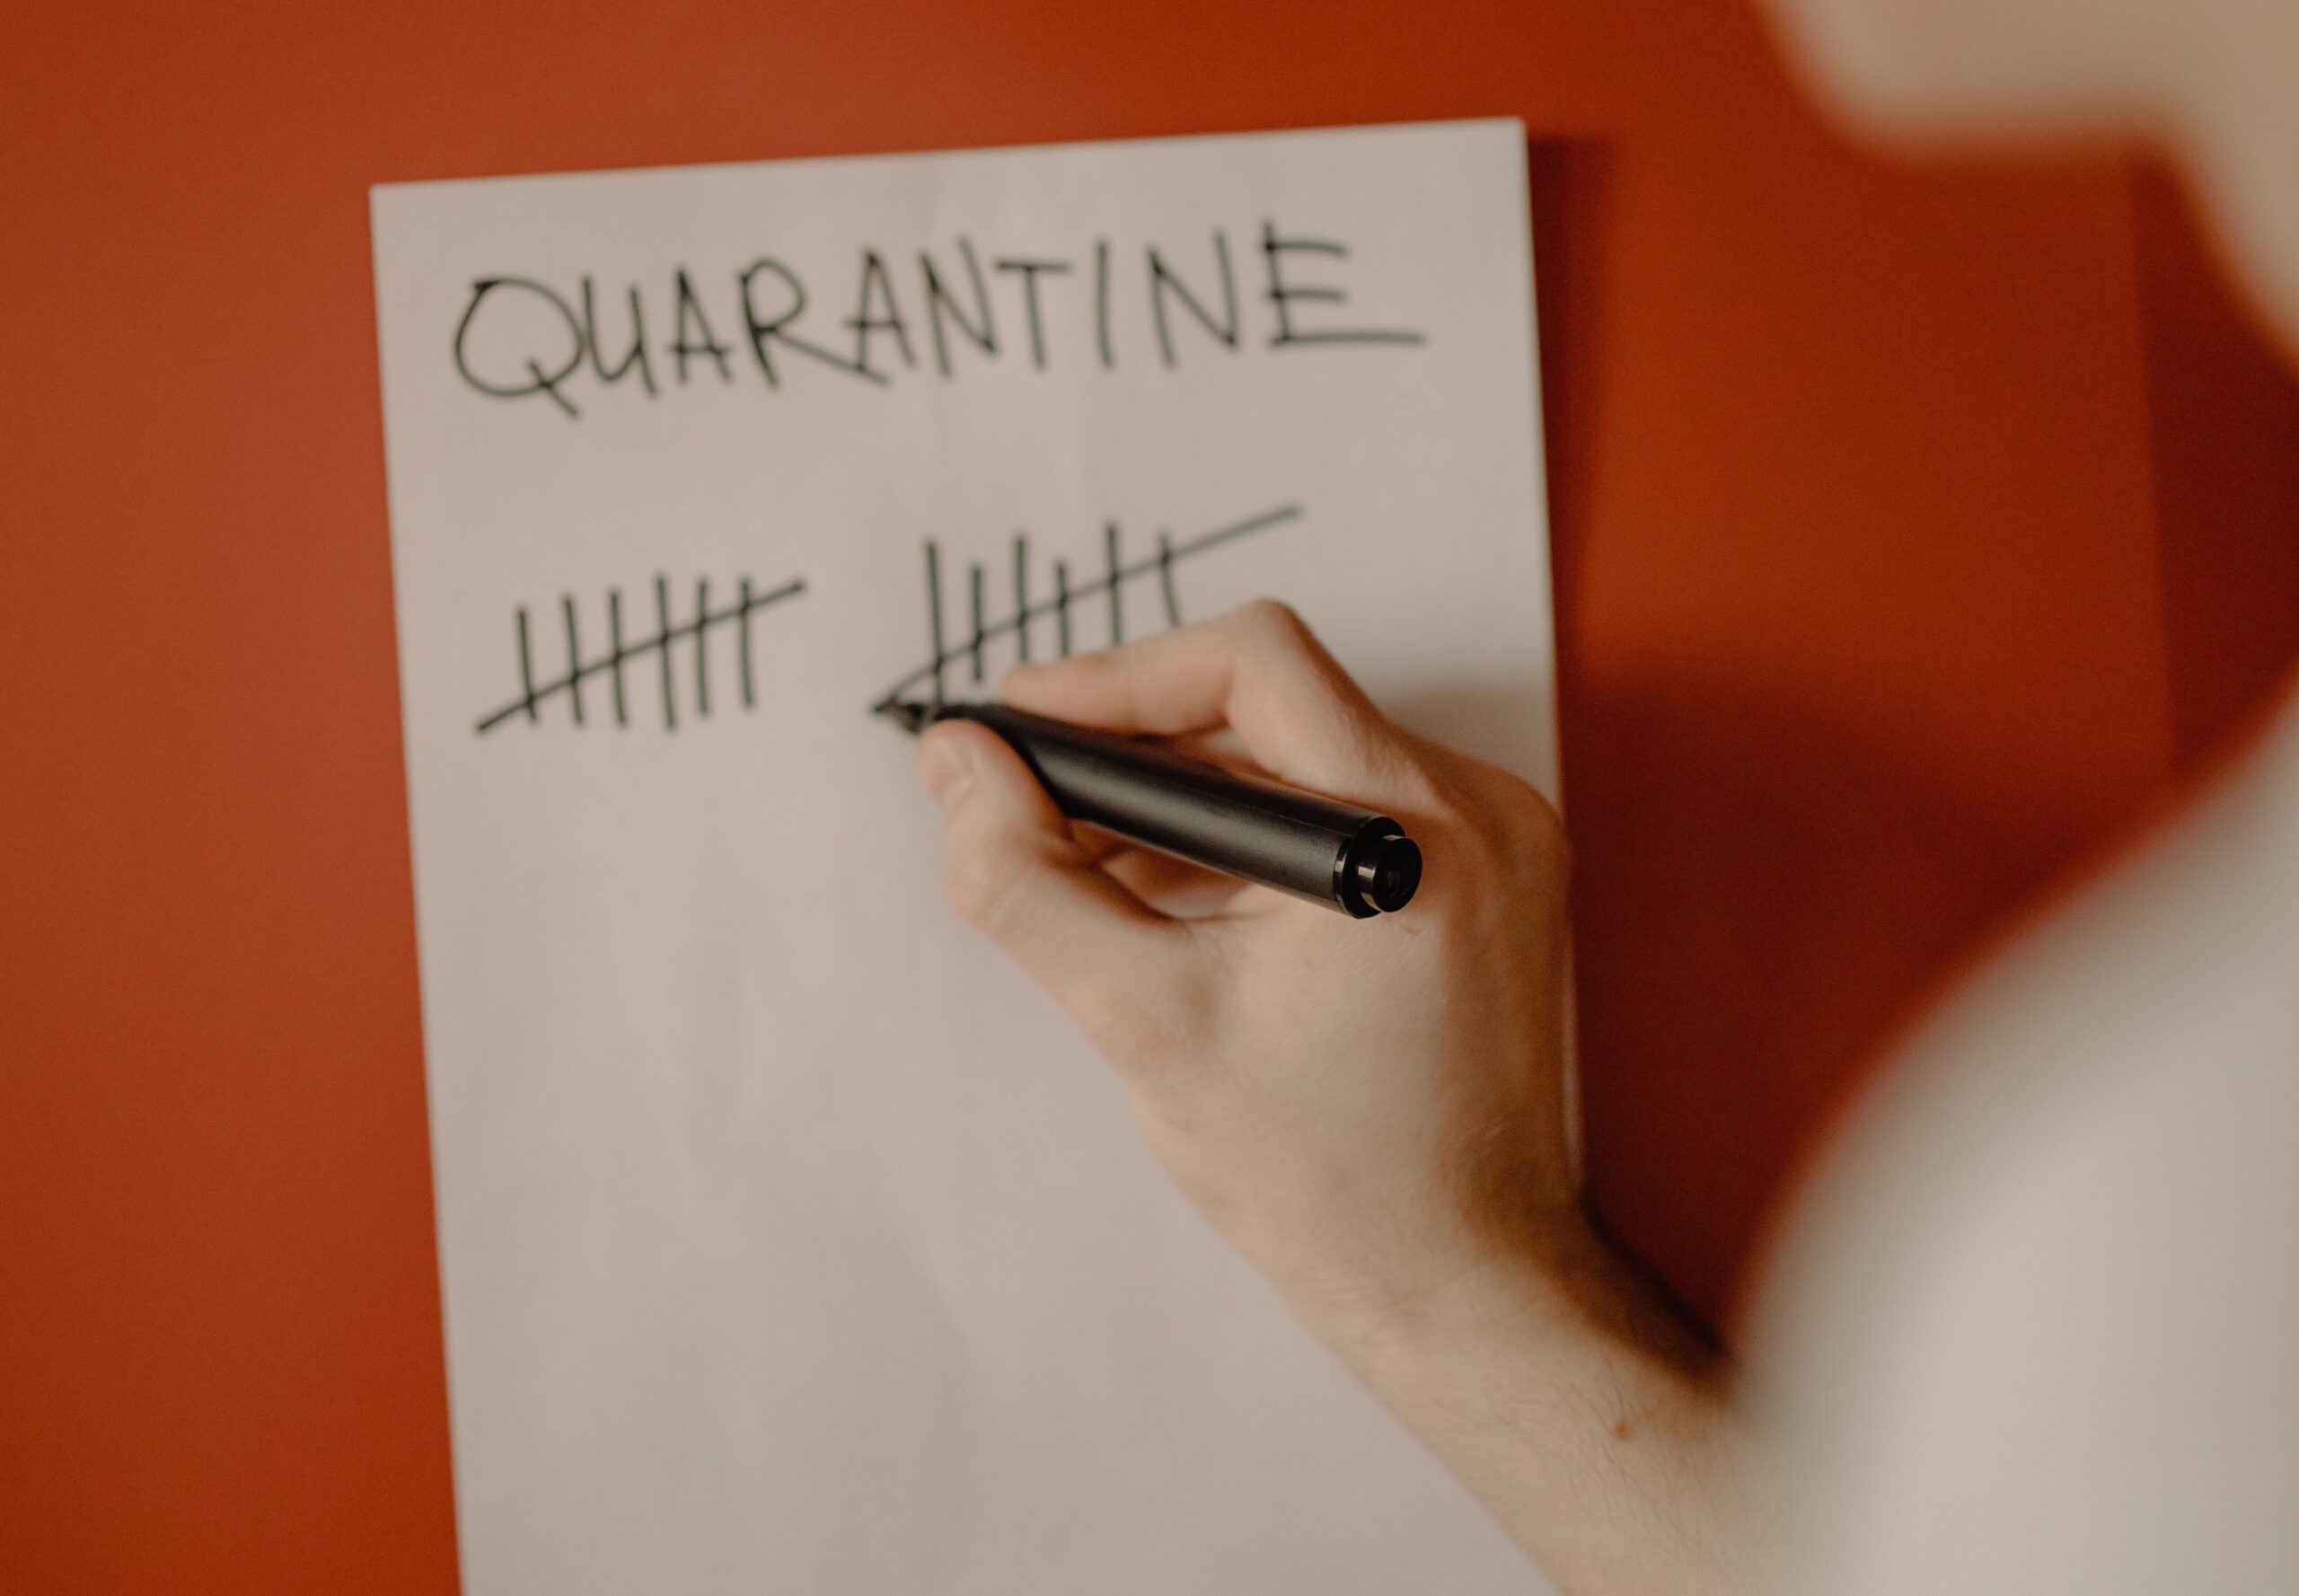 Quarantine Counting